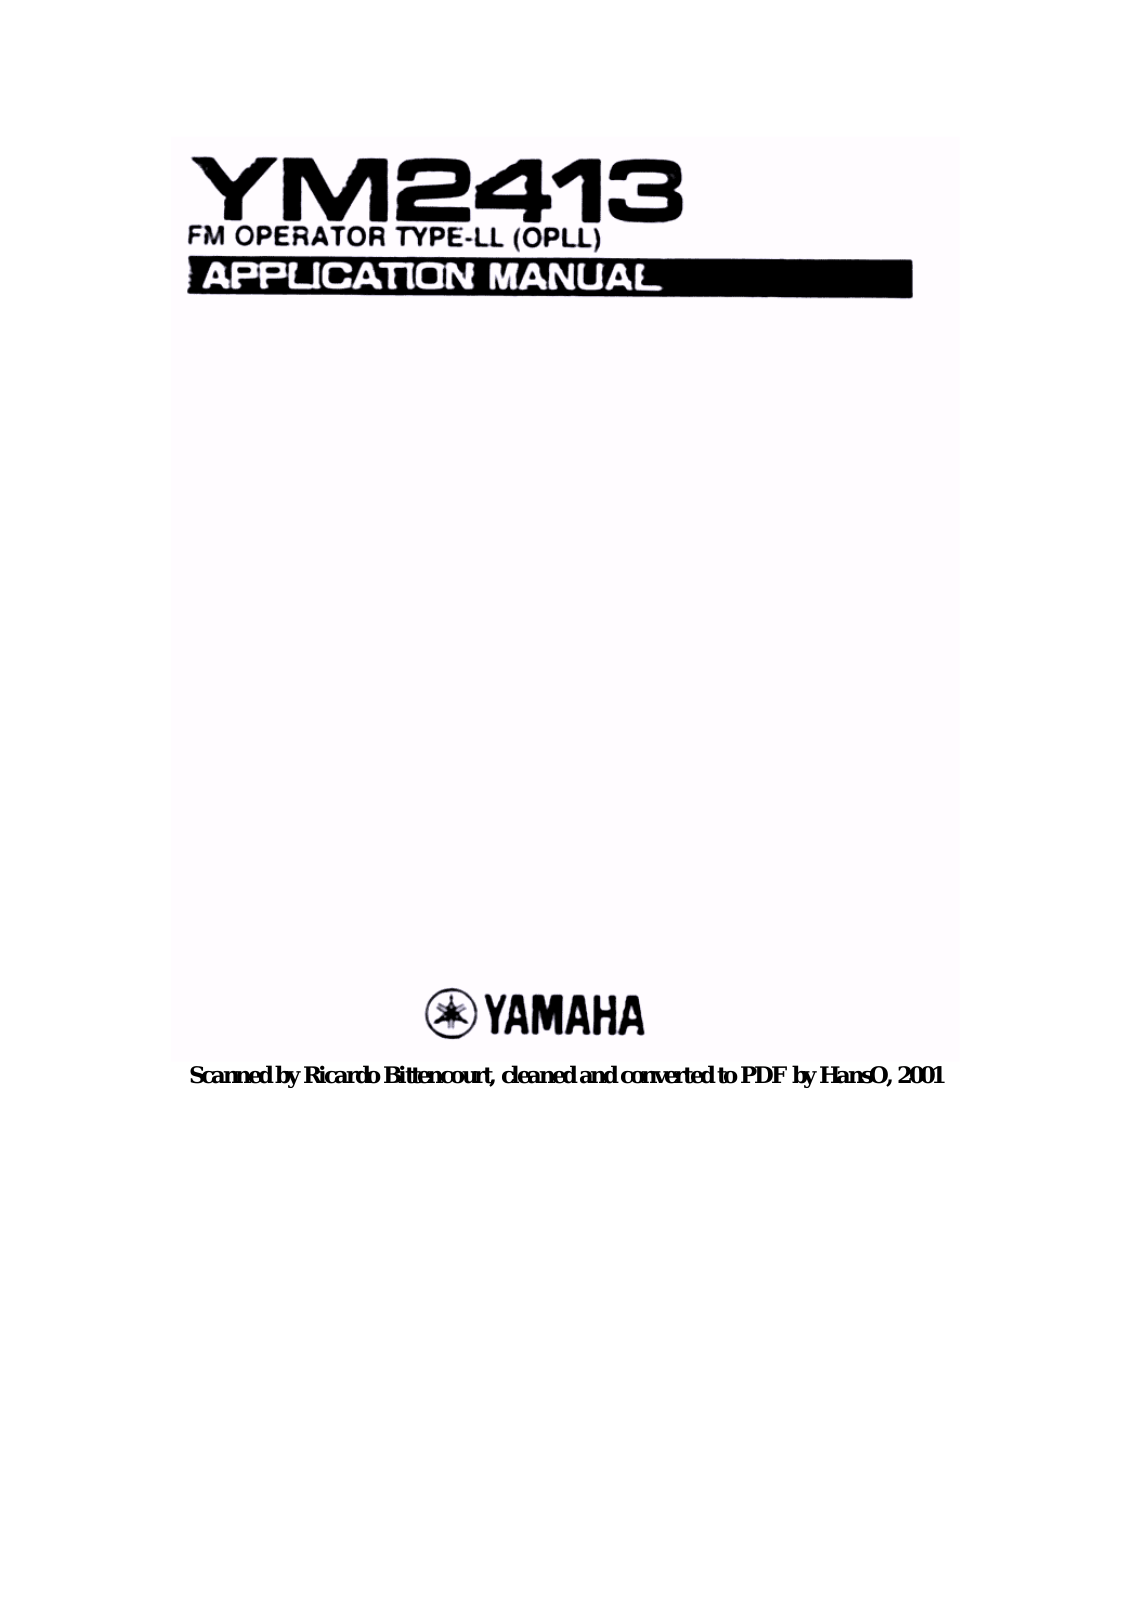 Yamaha YM2413 User Manual